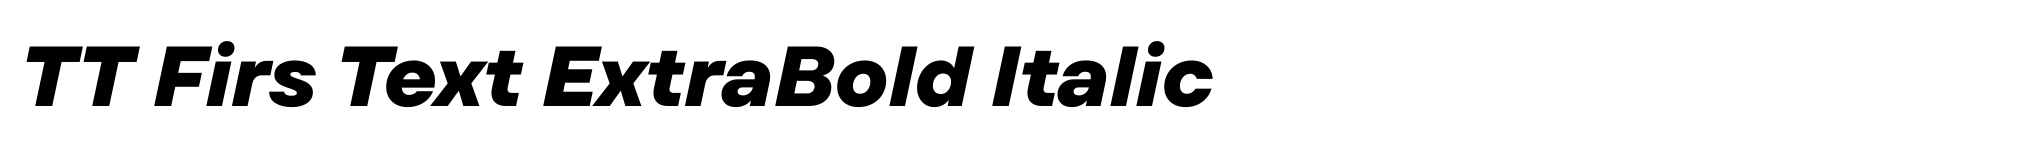 TT Firs Text ExtraBold Italic image